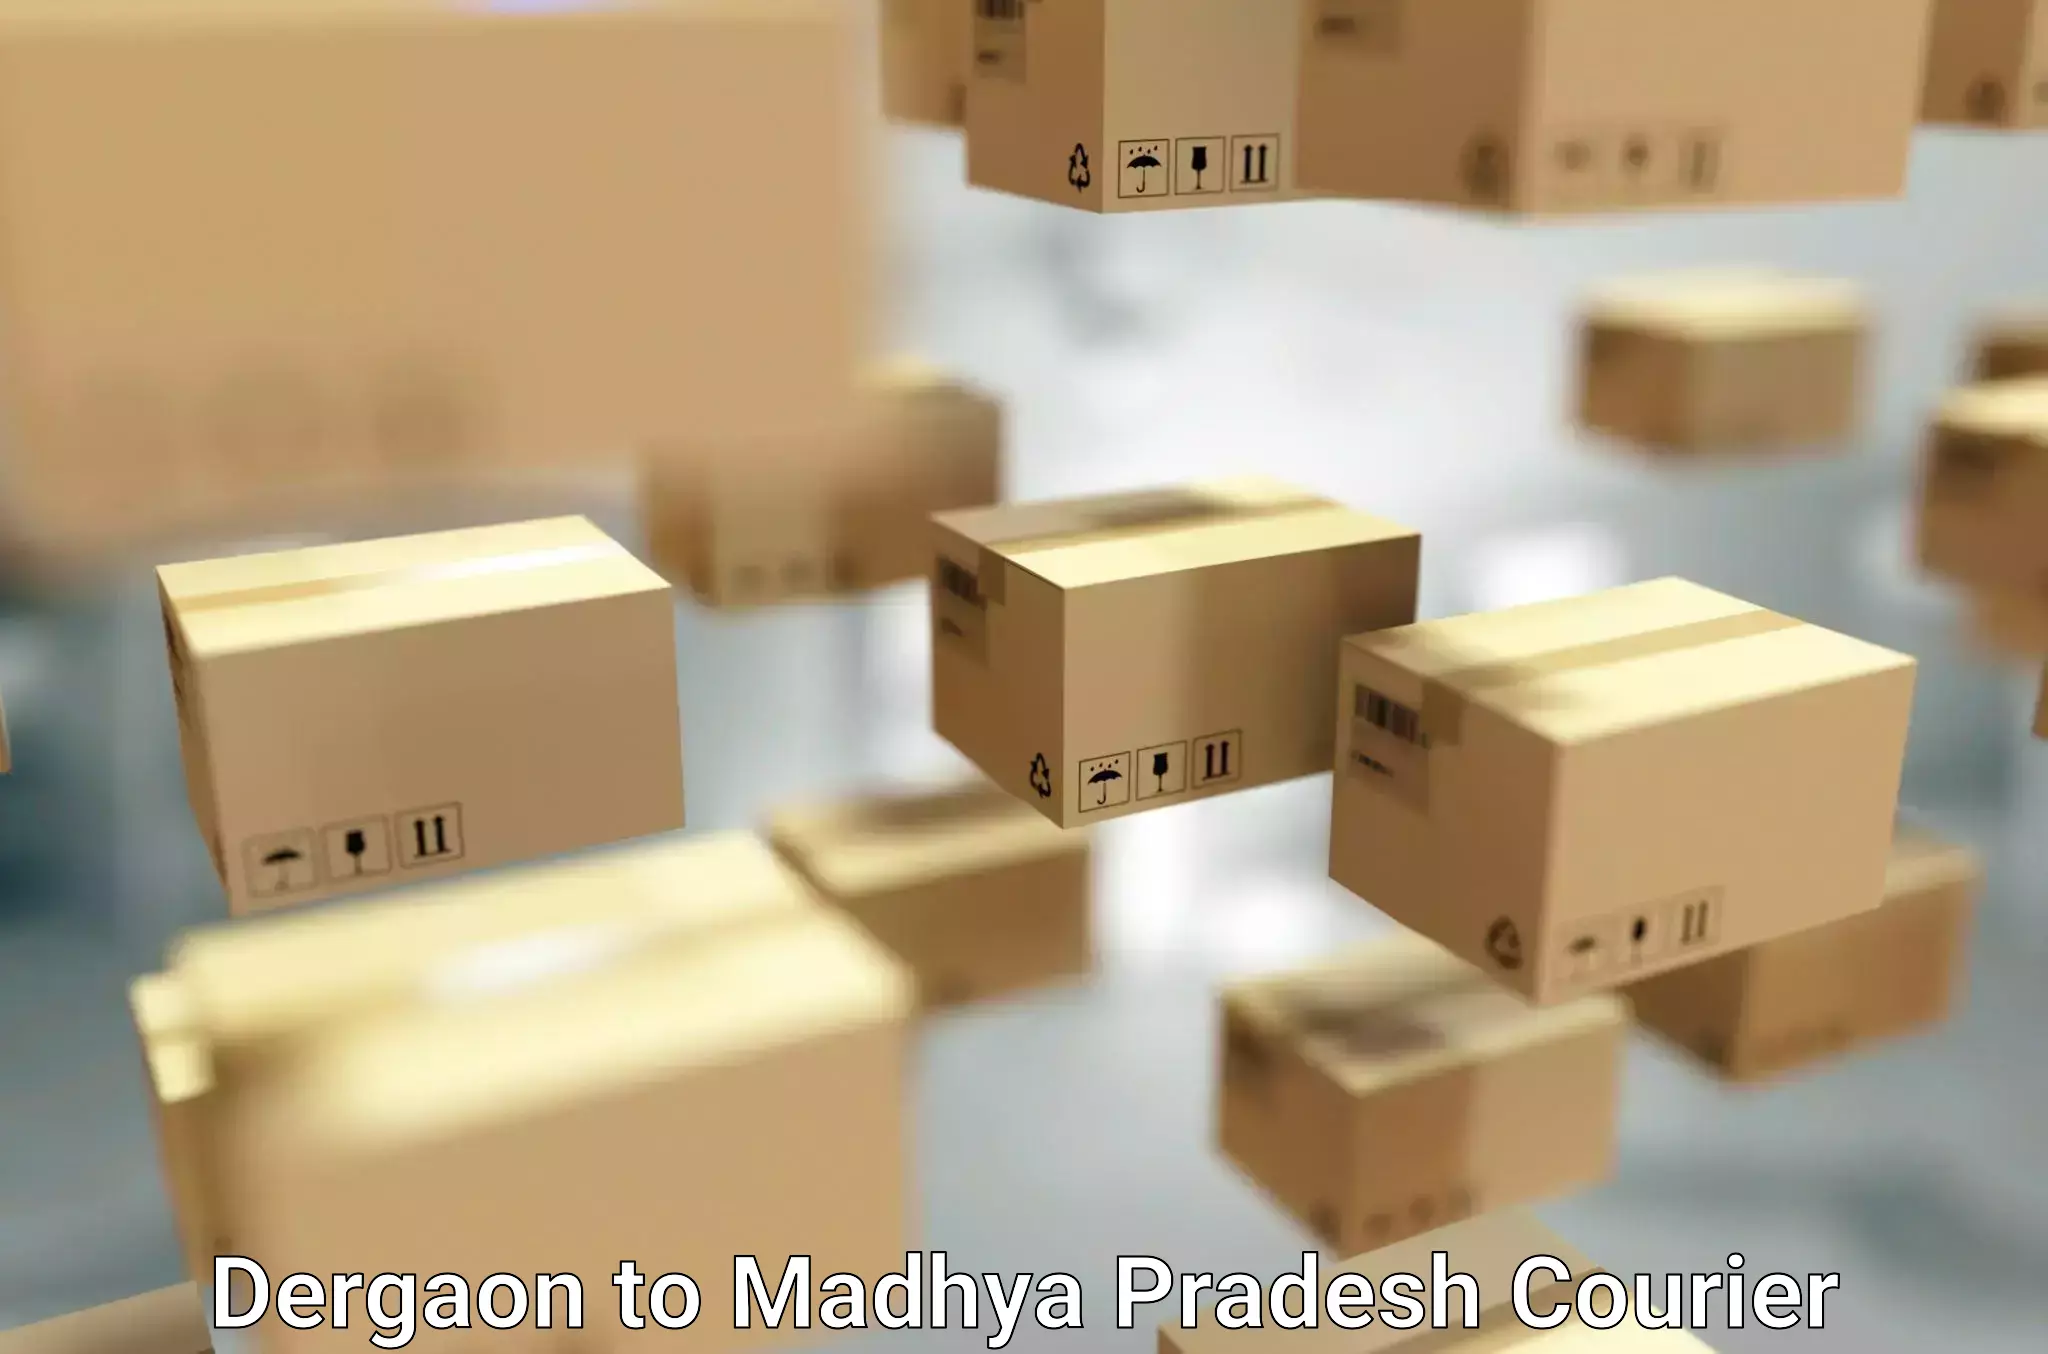 Trusted relocation experts Dergaon to Madhya Pradesh